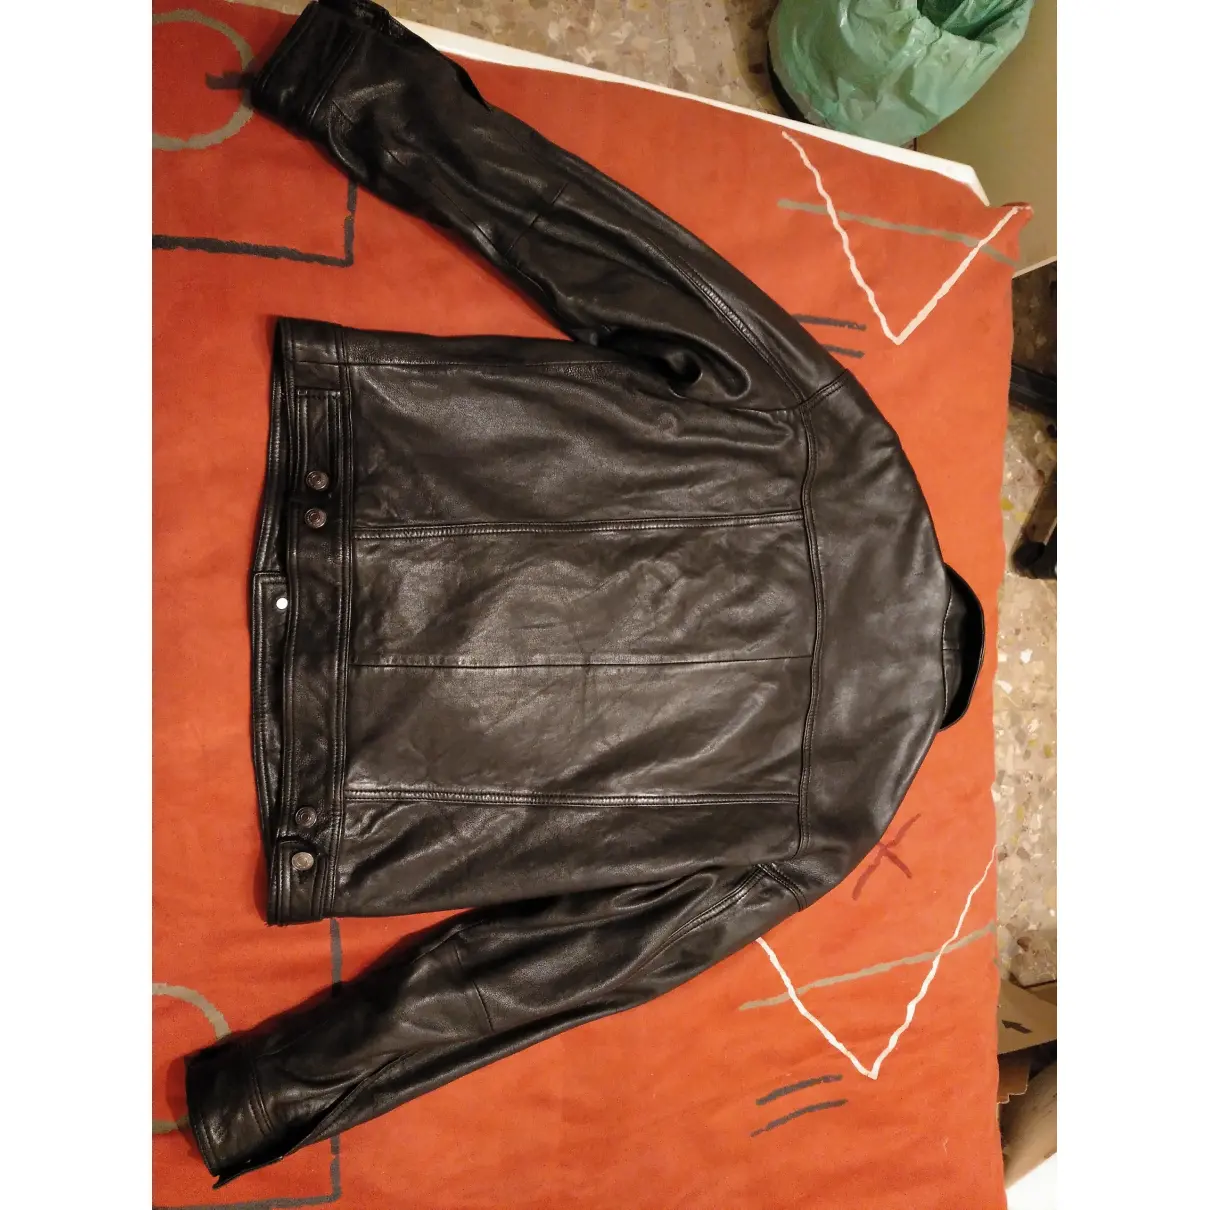 Buy Zara Leather jacket online